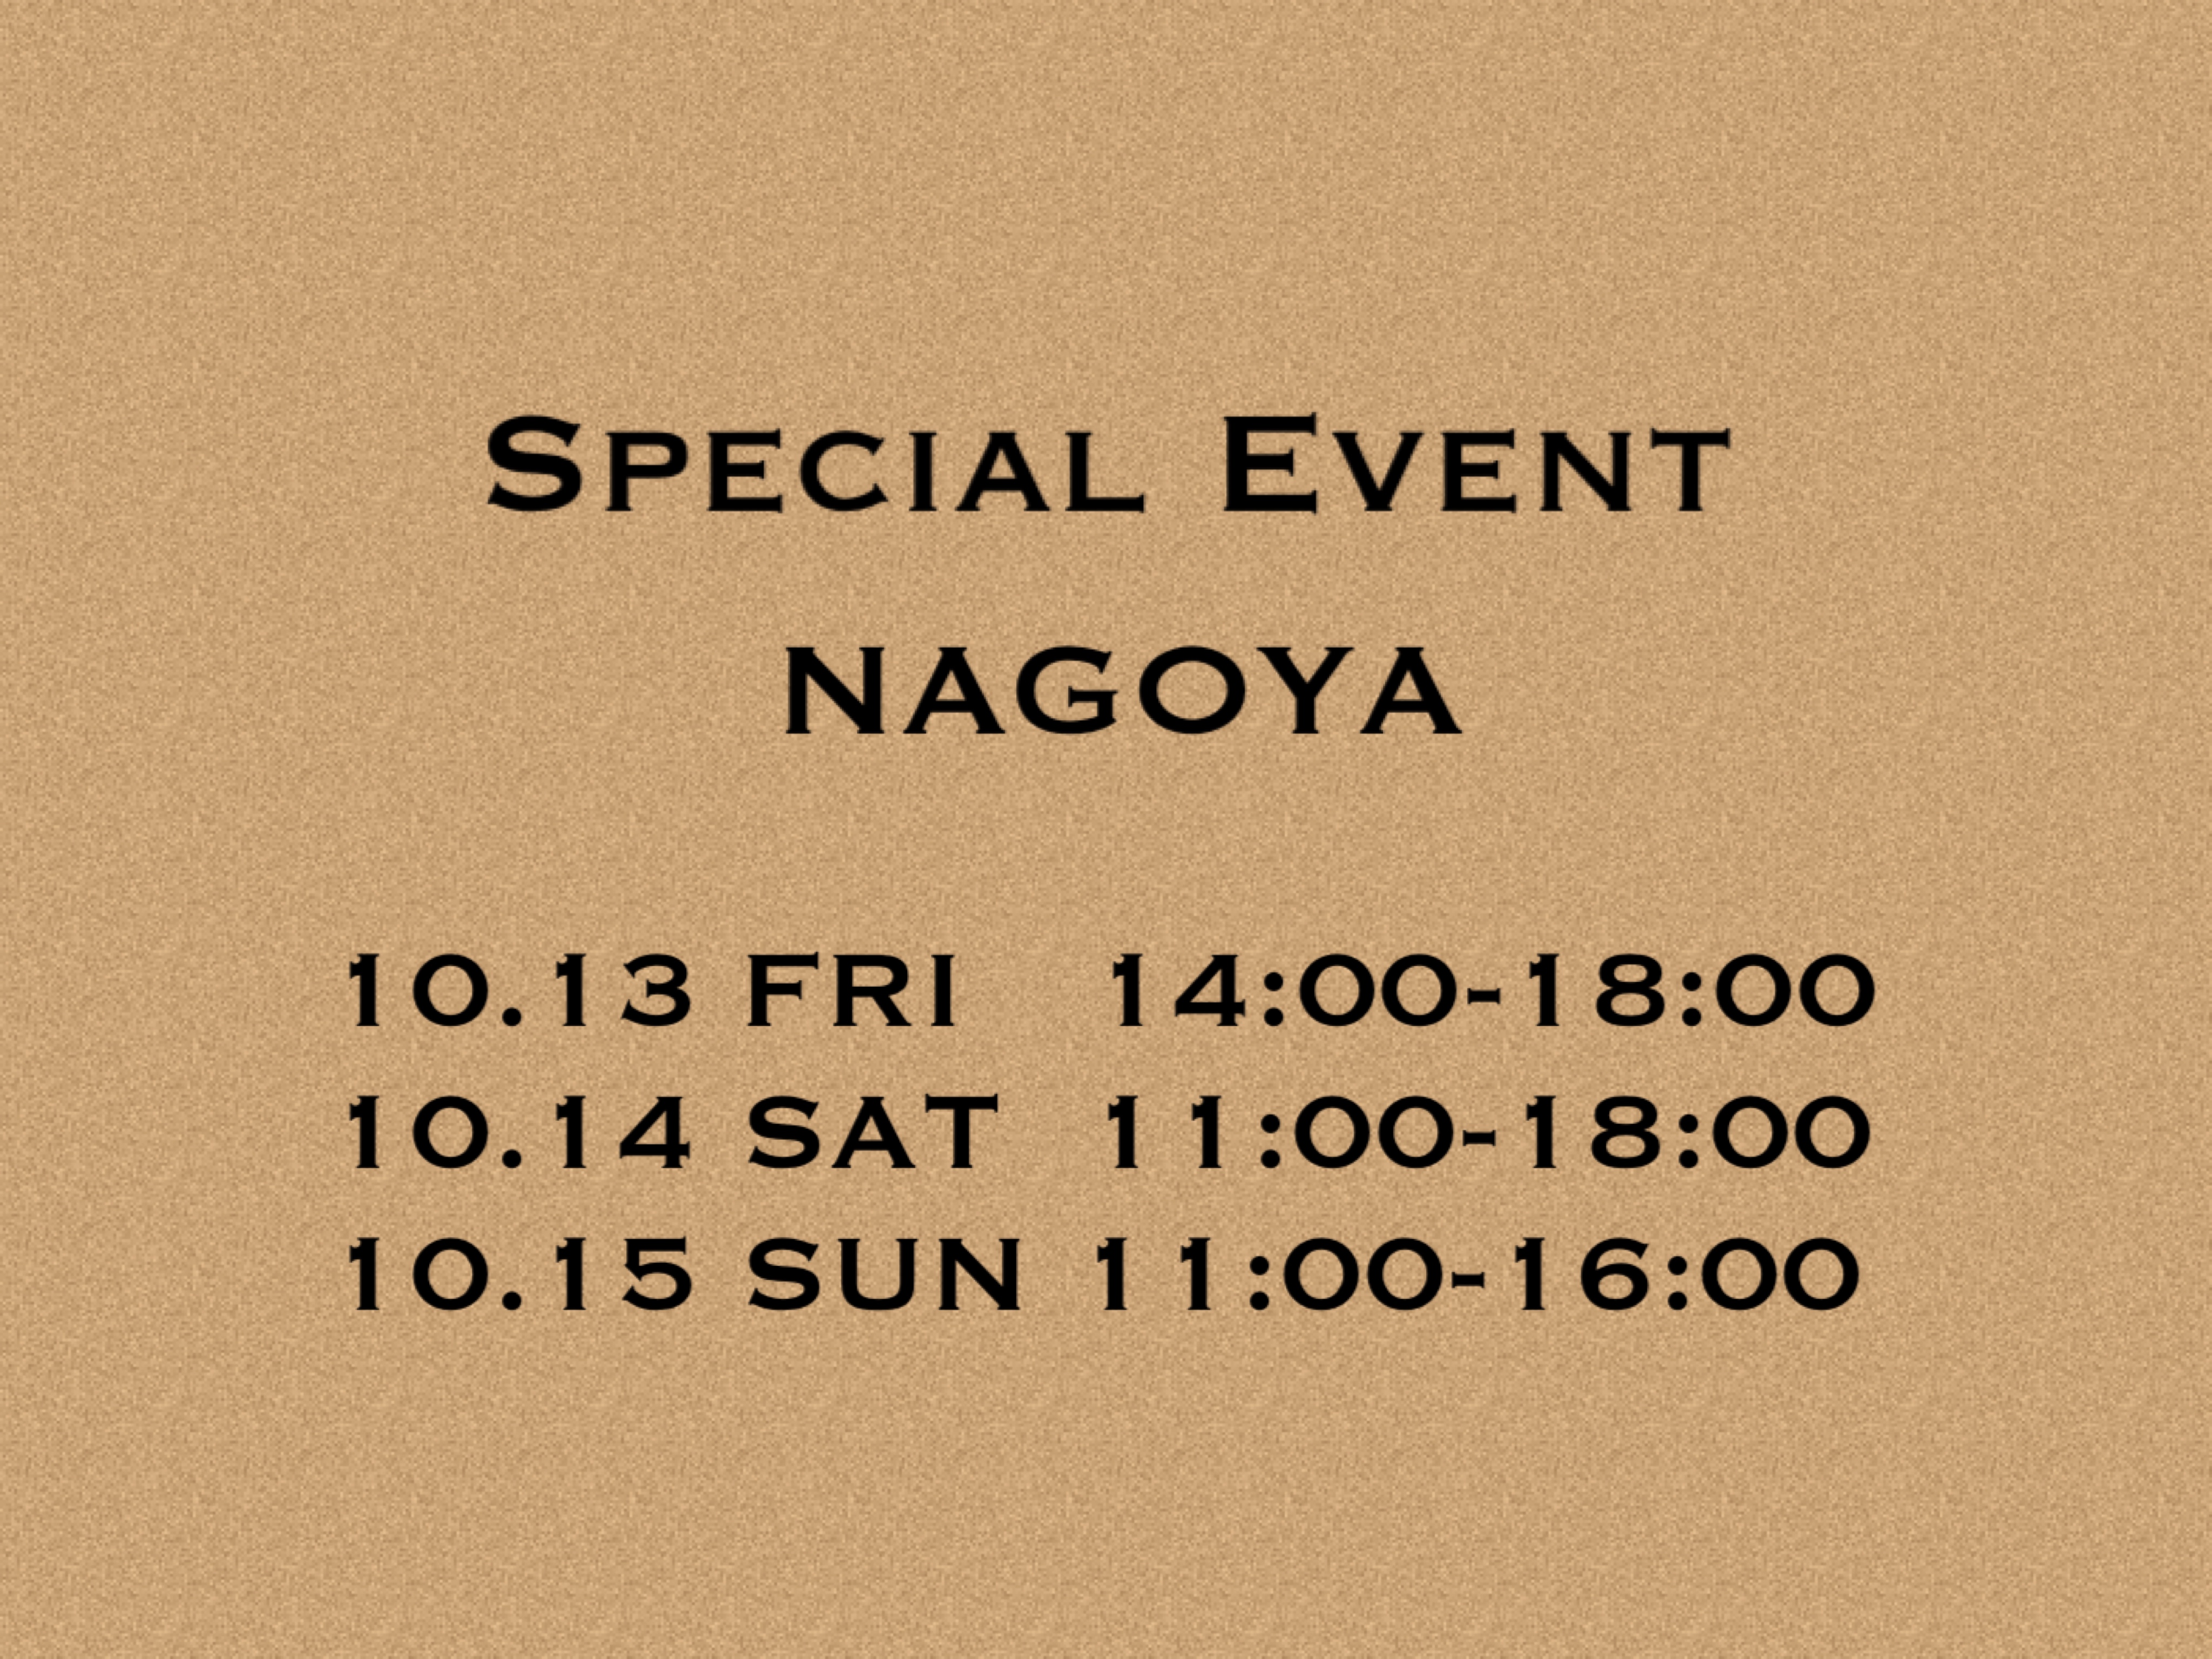 Special Event at NAGOYA